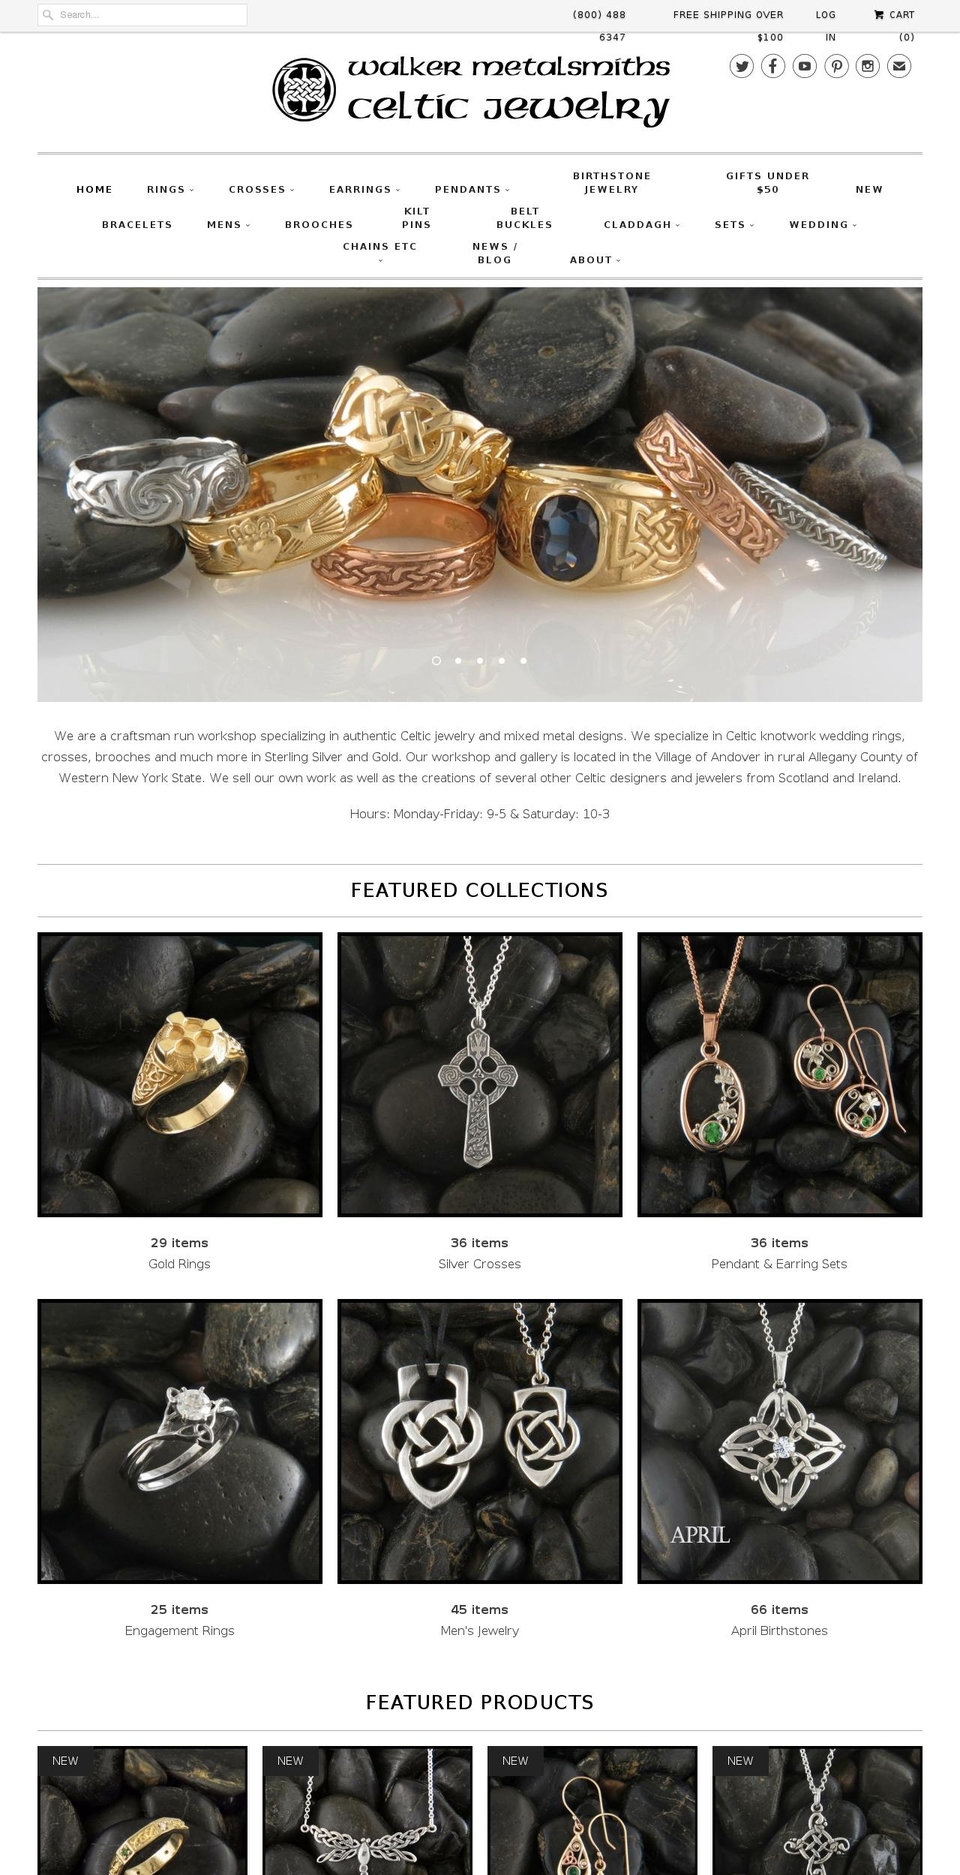 Responsive Shopify theme site example walkerscelticjewelry.com